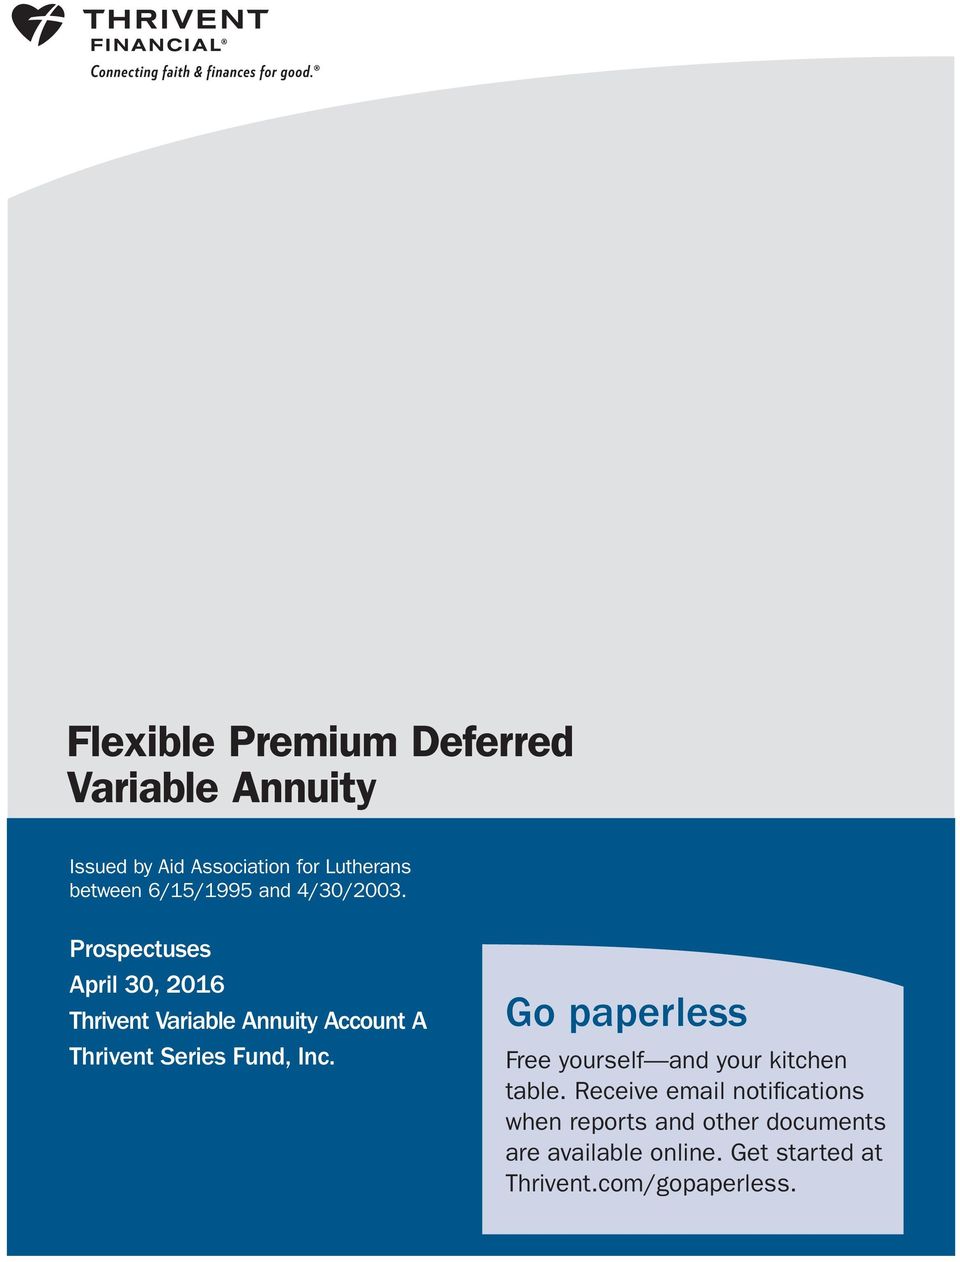 Flexible Premium Deferred Variable Annuity. Go paperless ...